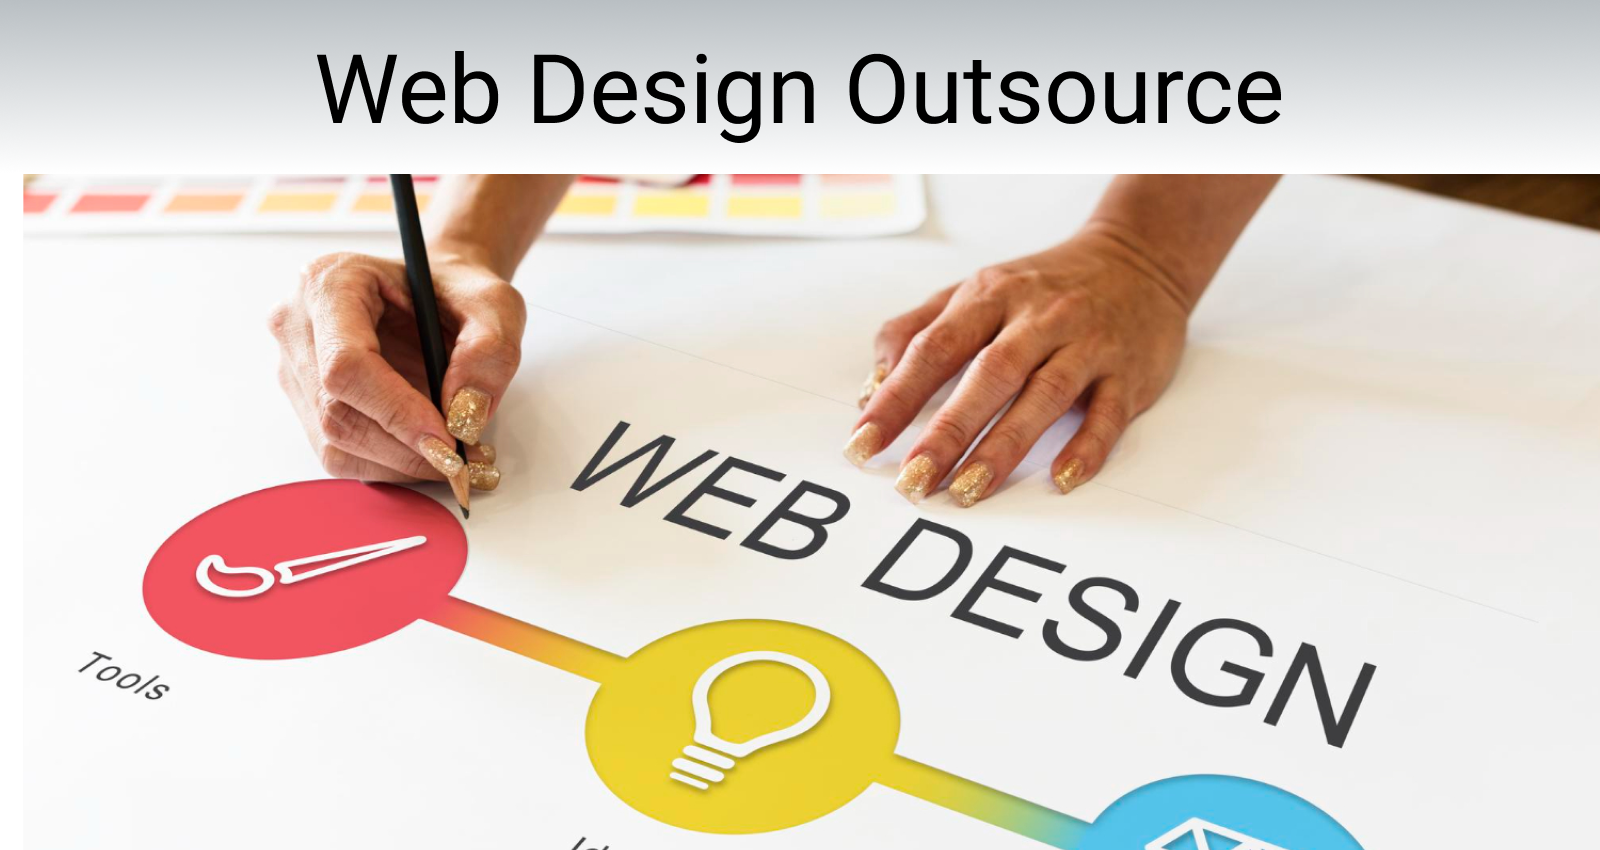 Web Design Outsourcing, Importance of Web Design, Challenges in Web Design, Outsourcing Web Design, Web Design Services